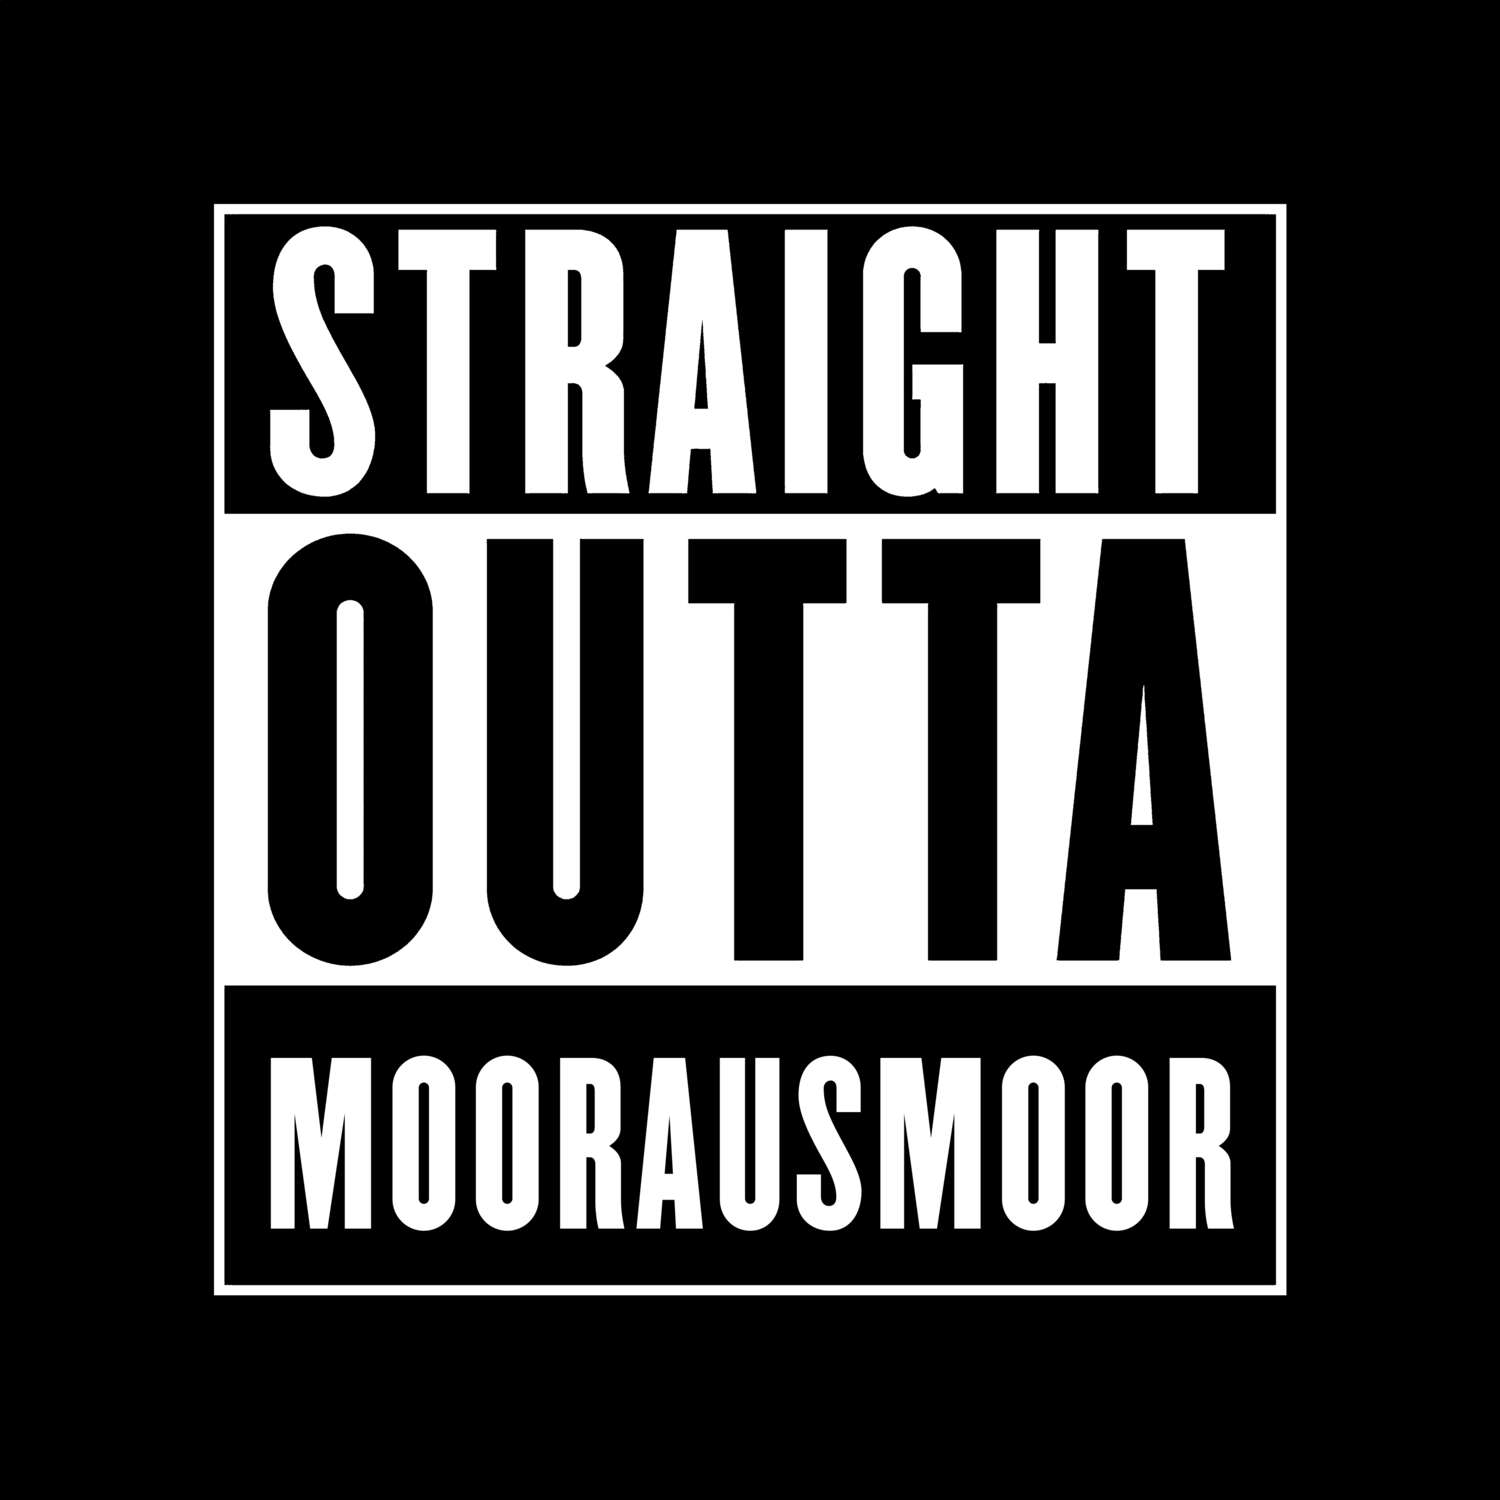 Moorausmoor T-Shirt »Straight Outta«